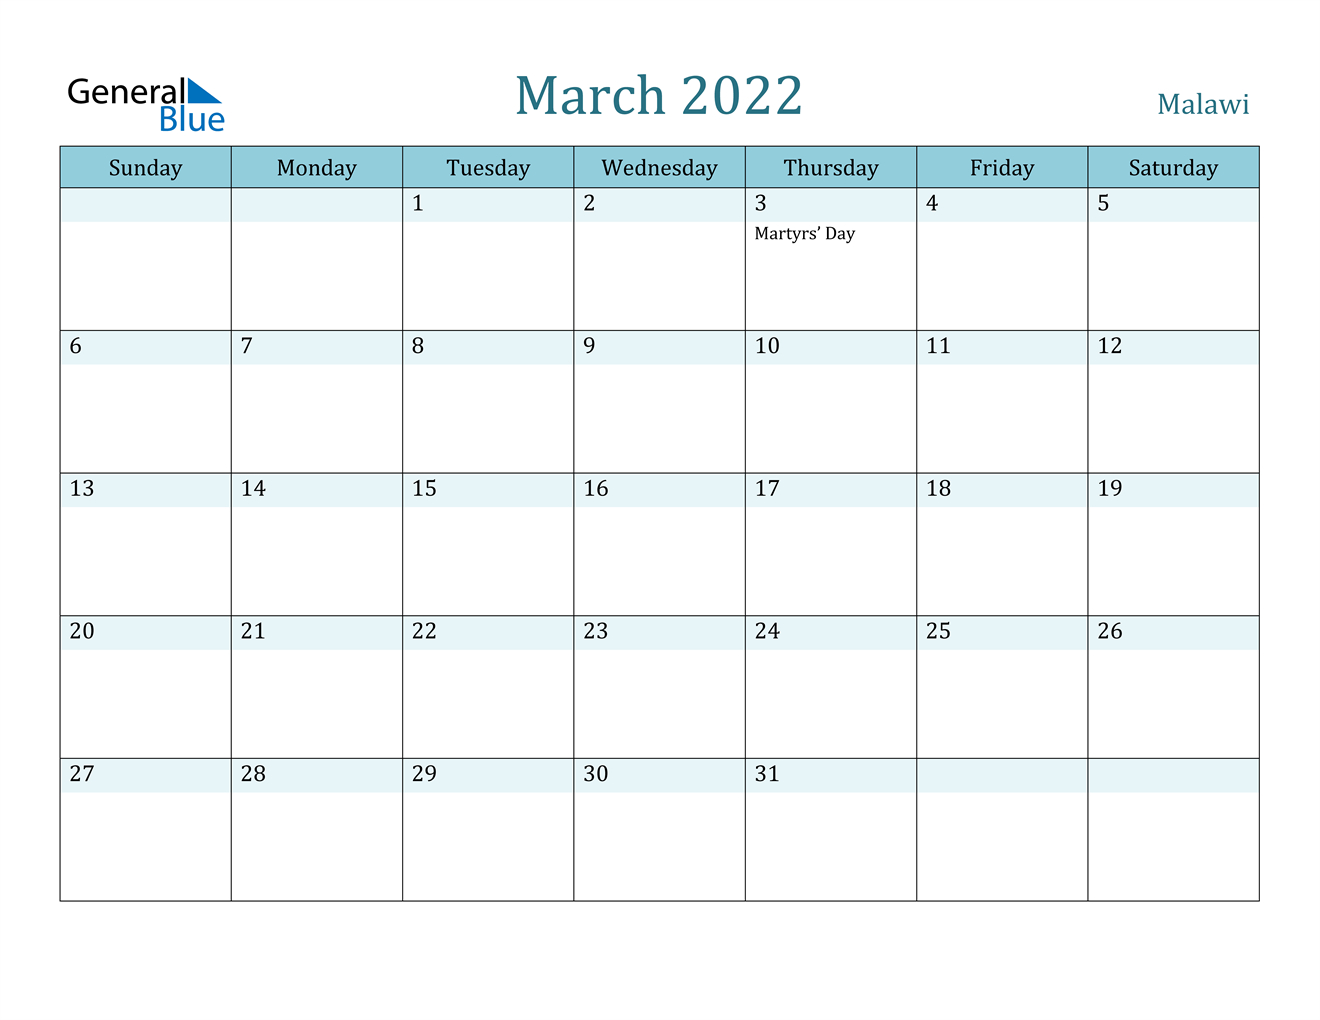 Pick Blank Calendar 2022 March